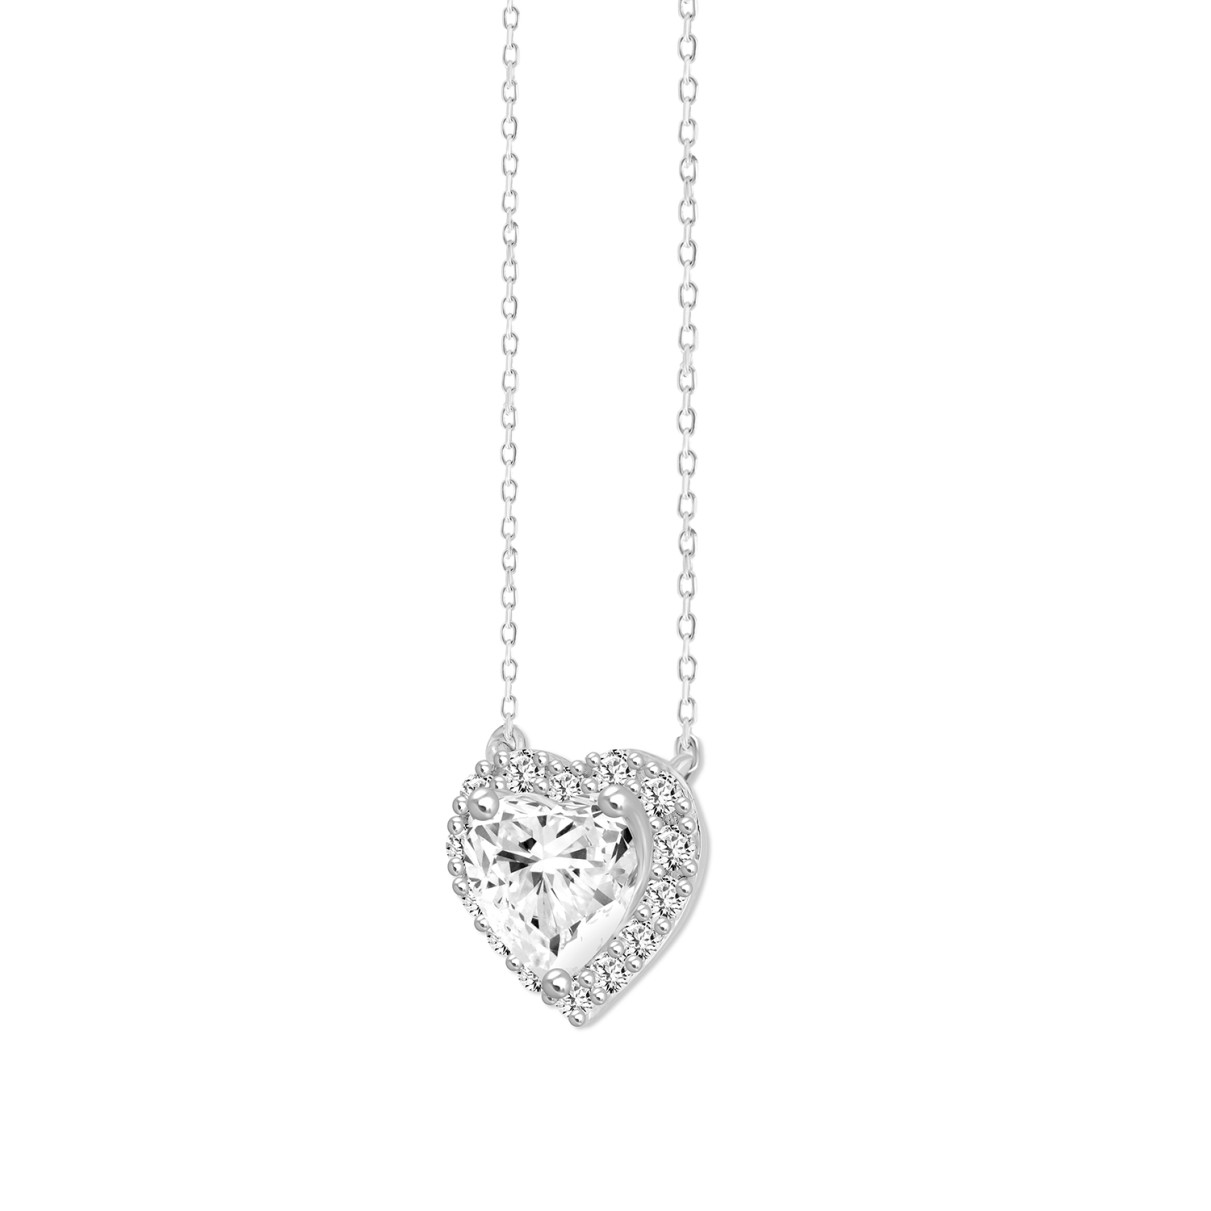 LADIES NECKLACE 1 1/4CT ROUND DIAMOND 14K WHITE GOLD (CENTER STONE HEART DIAMOND 1CT)